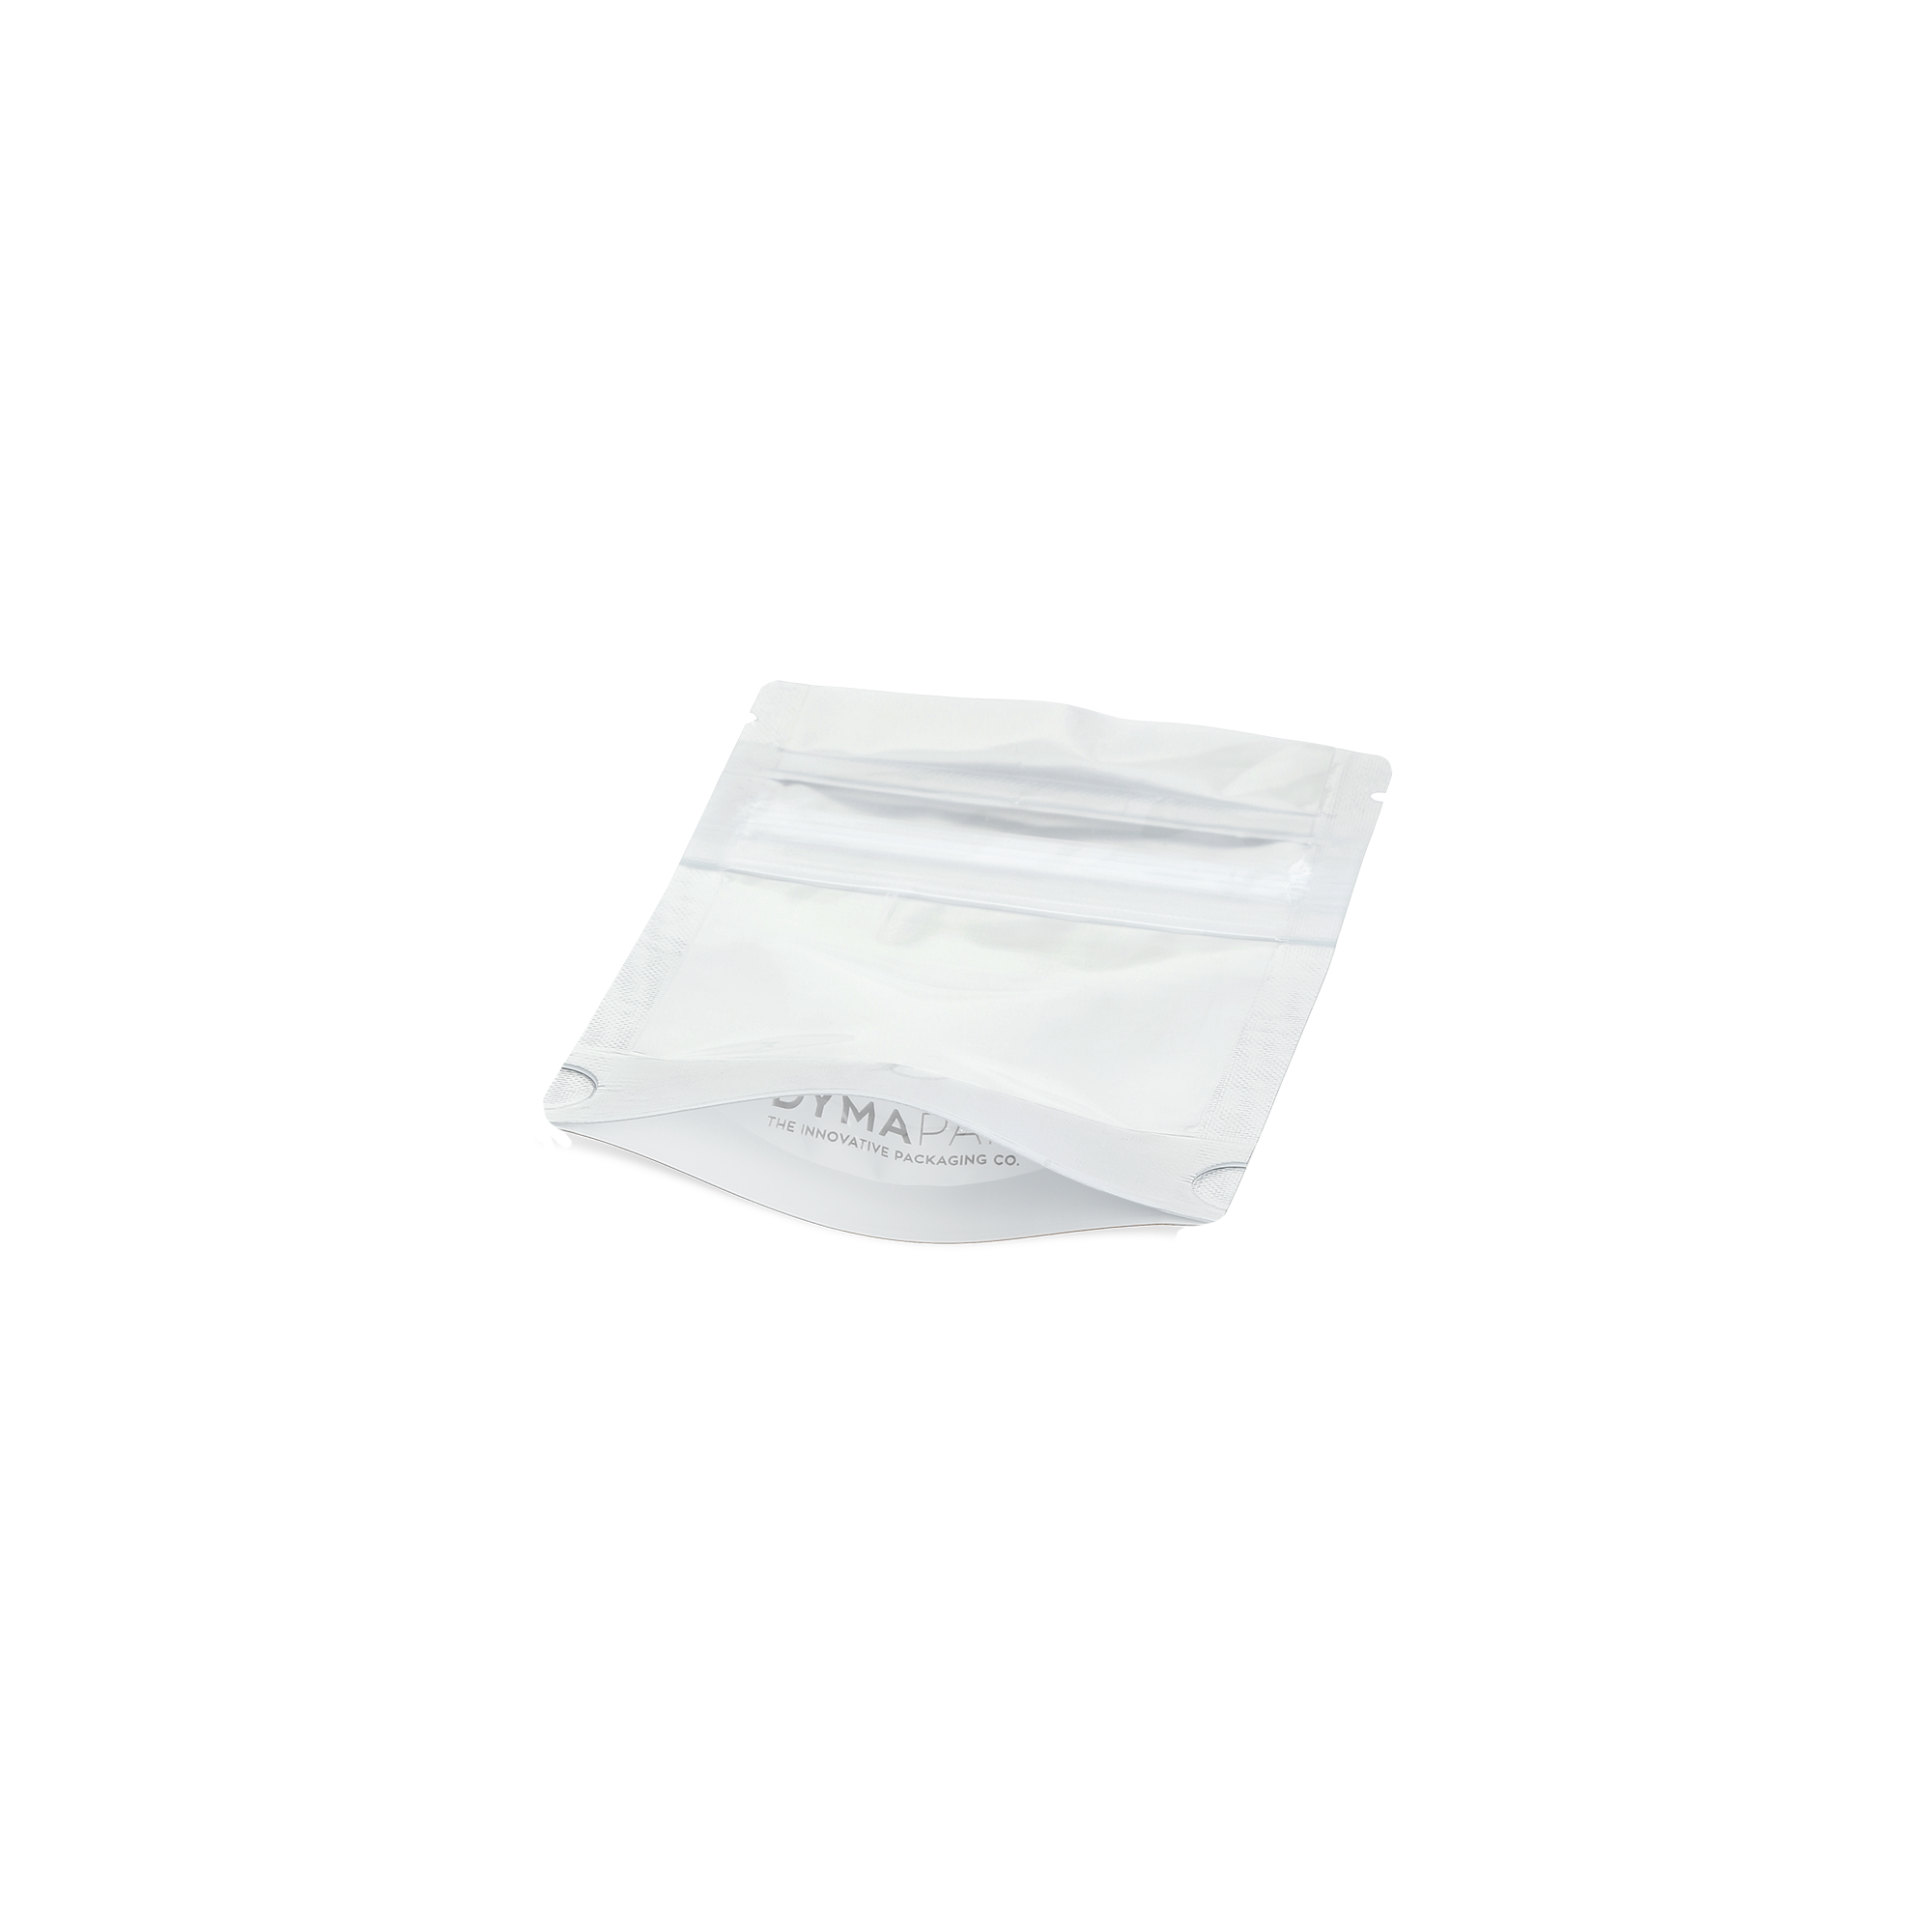 Mylar Bag DymaPak Child Resistant CR White 1/4 oz - Opaque 7 Grams (1,000 Count), 500 Count